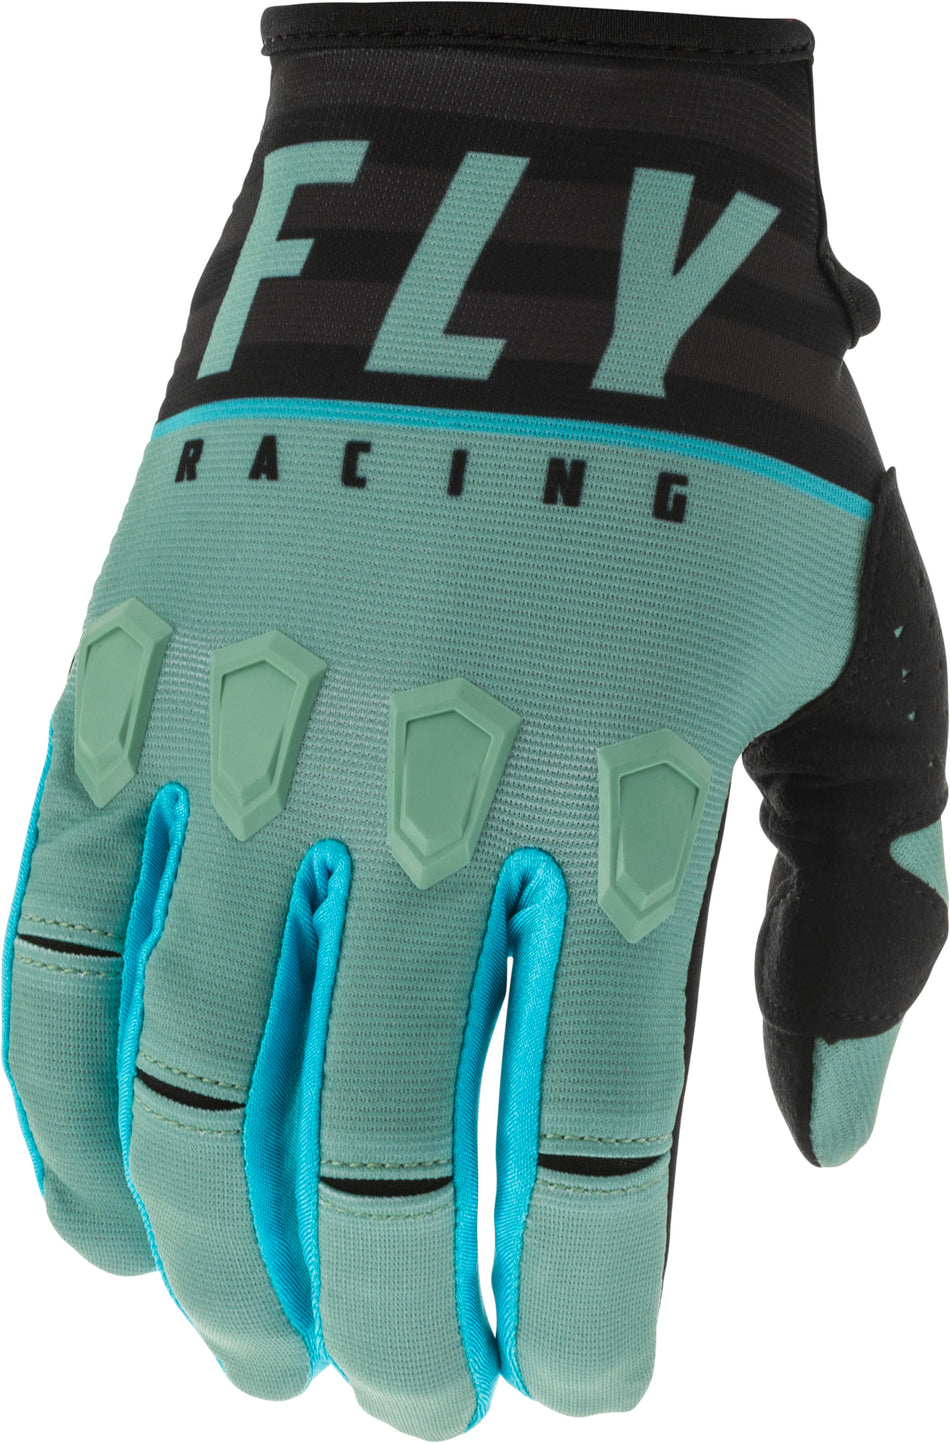 FLY RACING Kinetic K120 Gloves Sage Green/Black Sz 11 373-41611